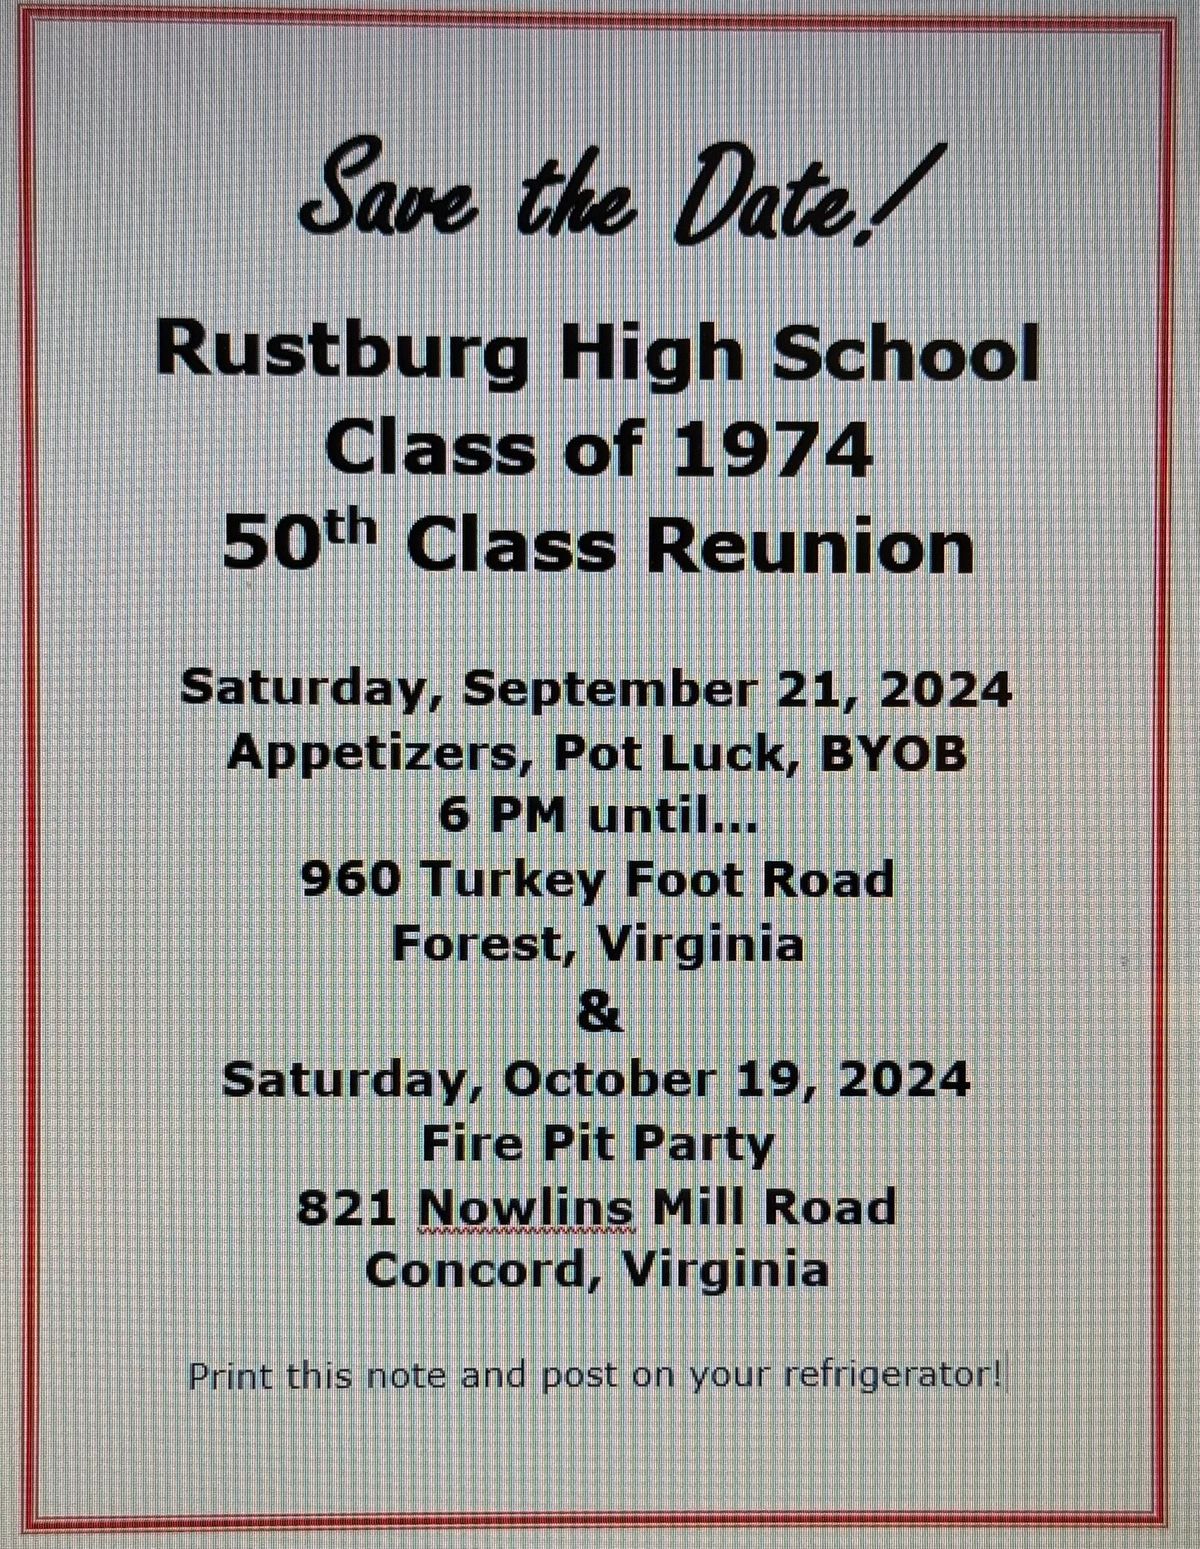 50th Class Reunion